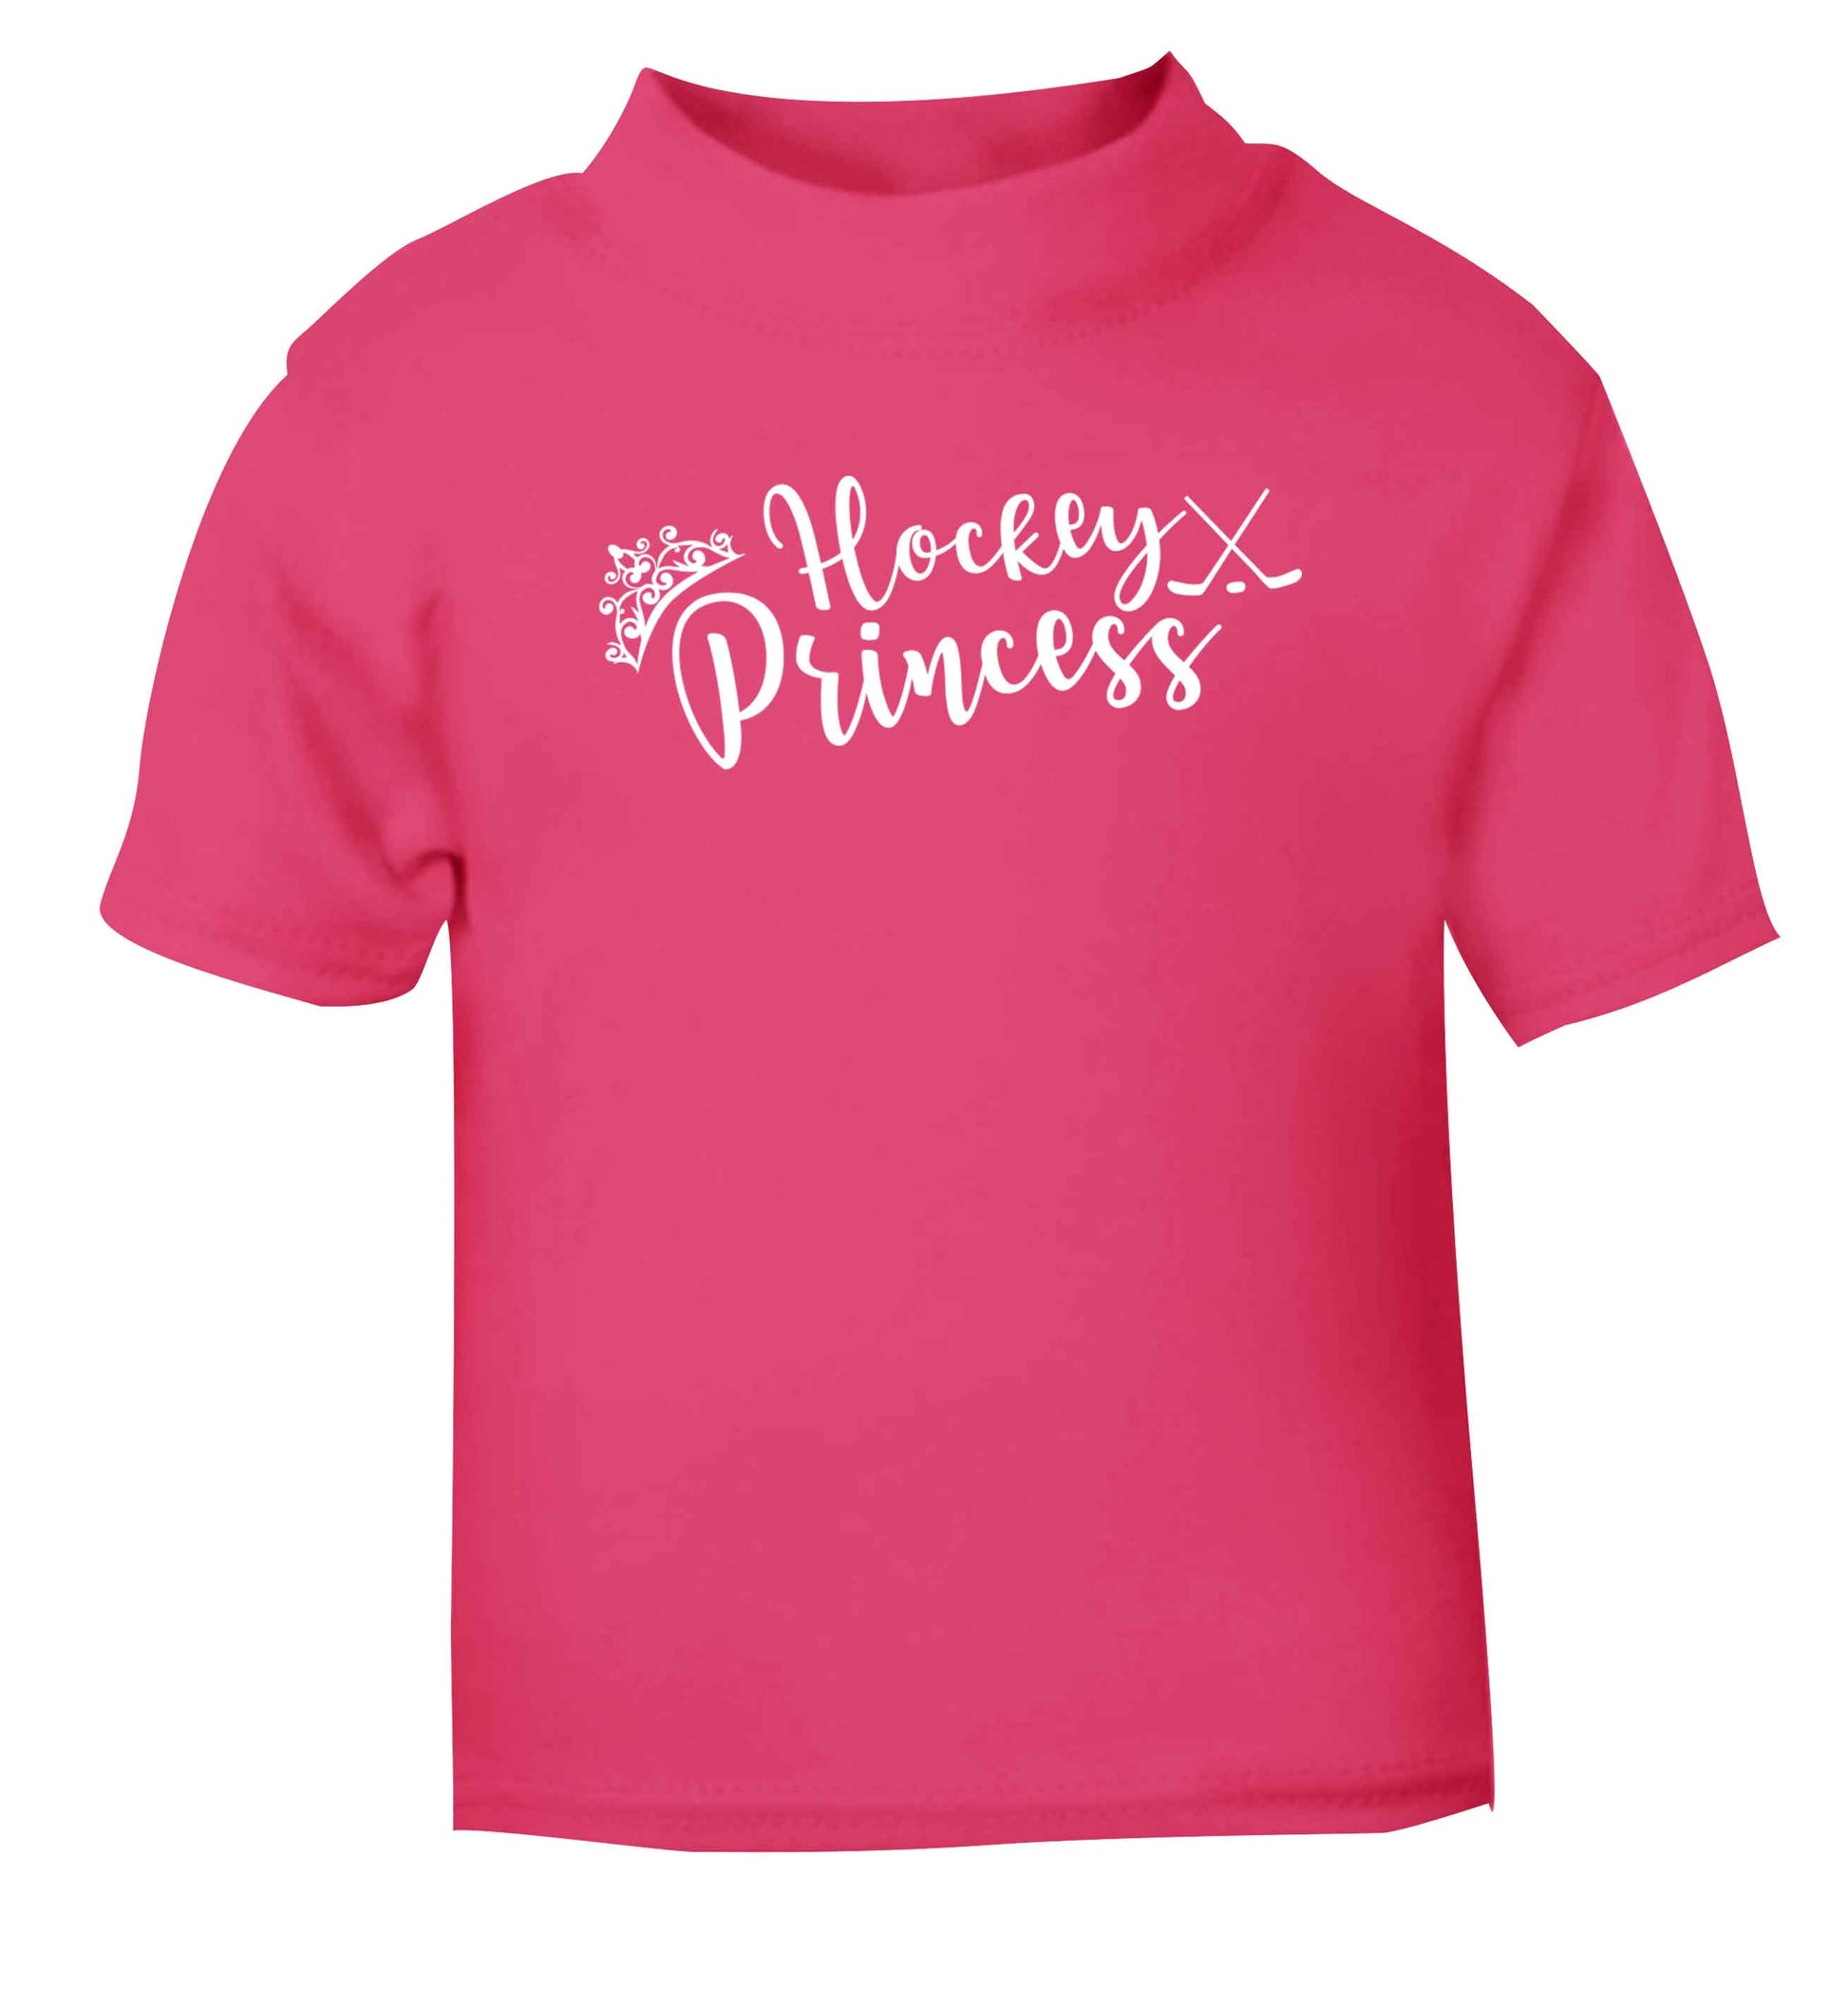 Hockey princess pink Baby Toddler Tshirt 2 Years